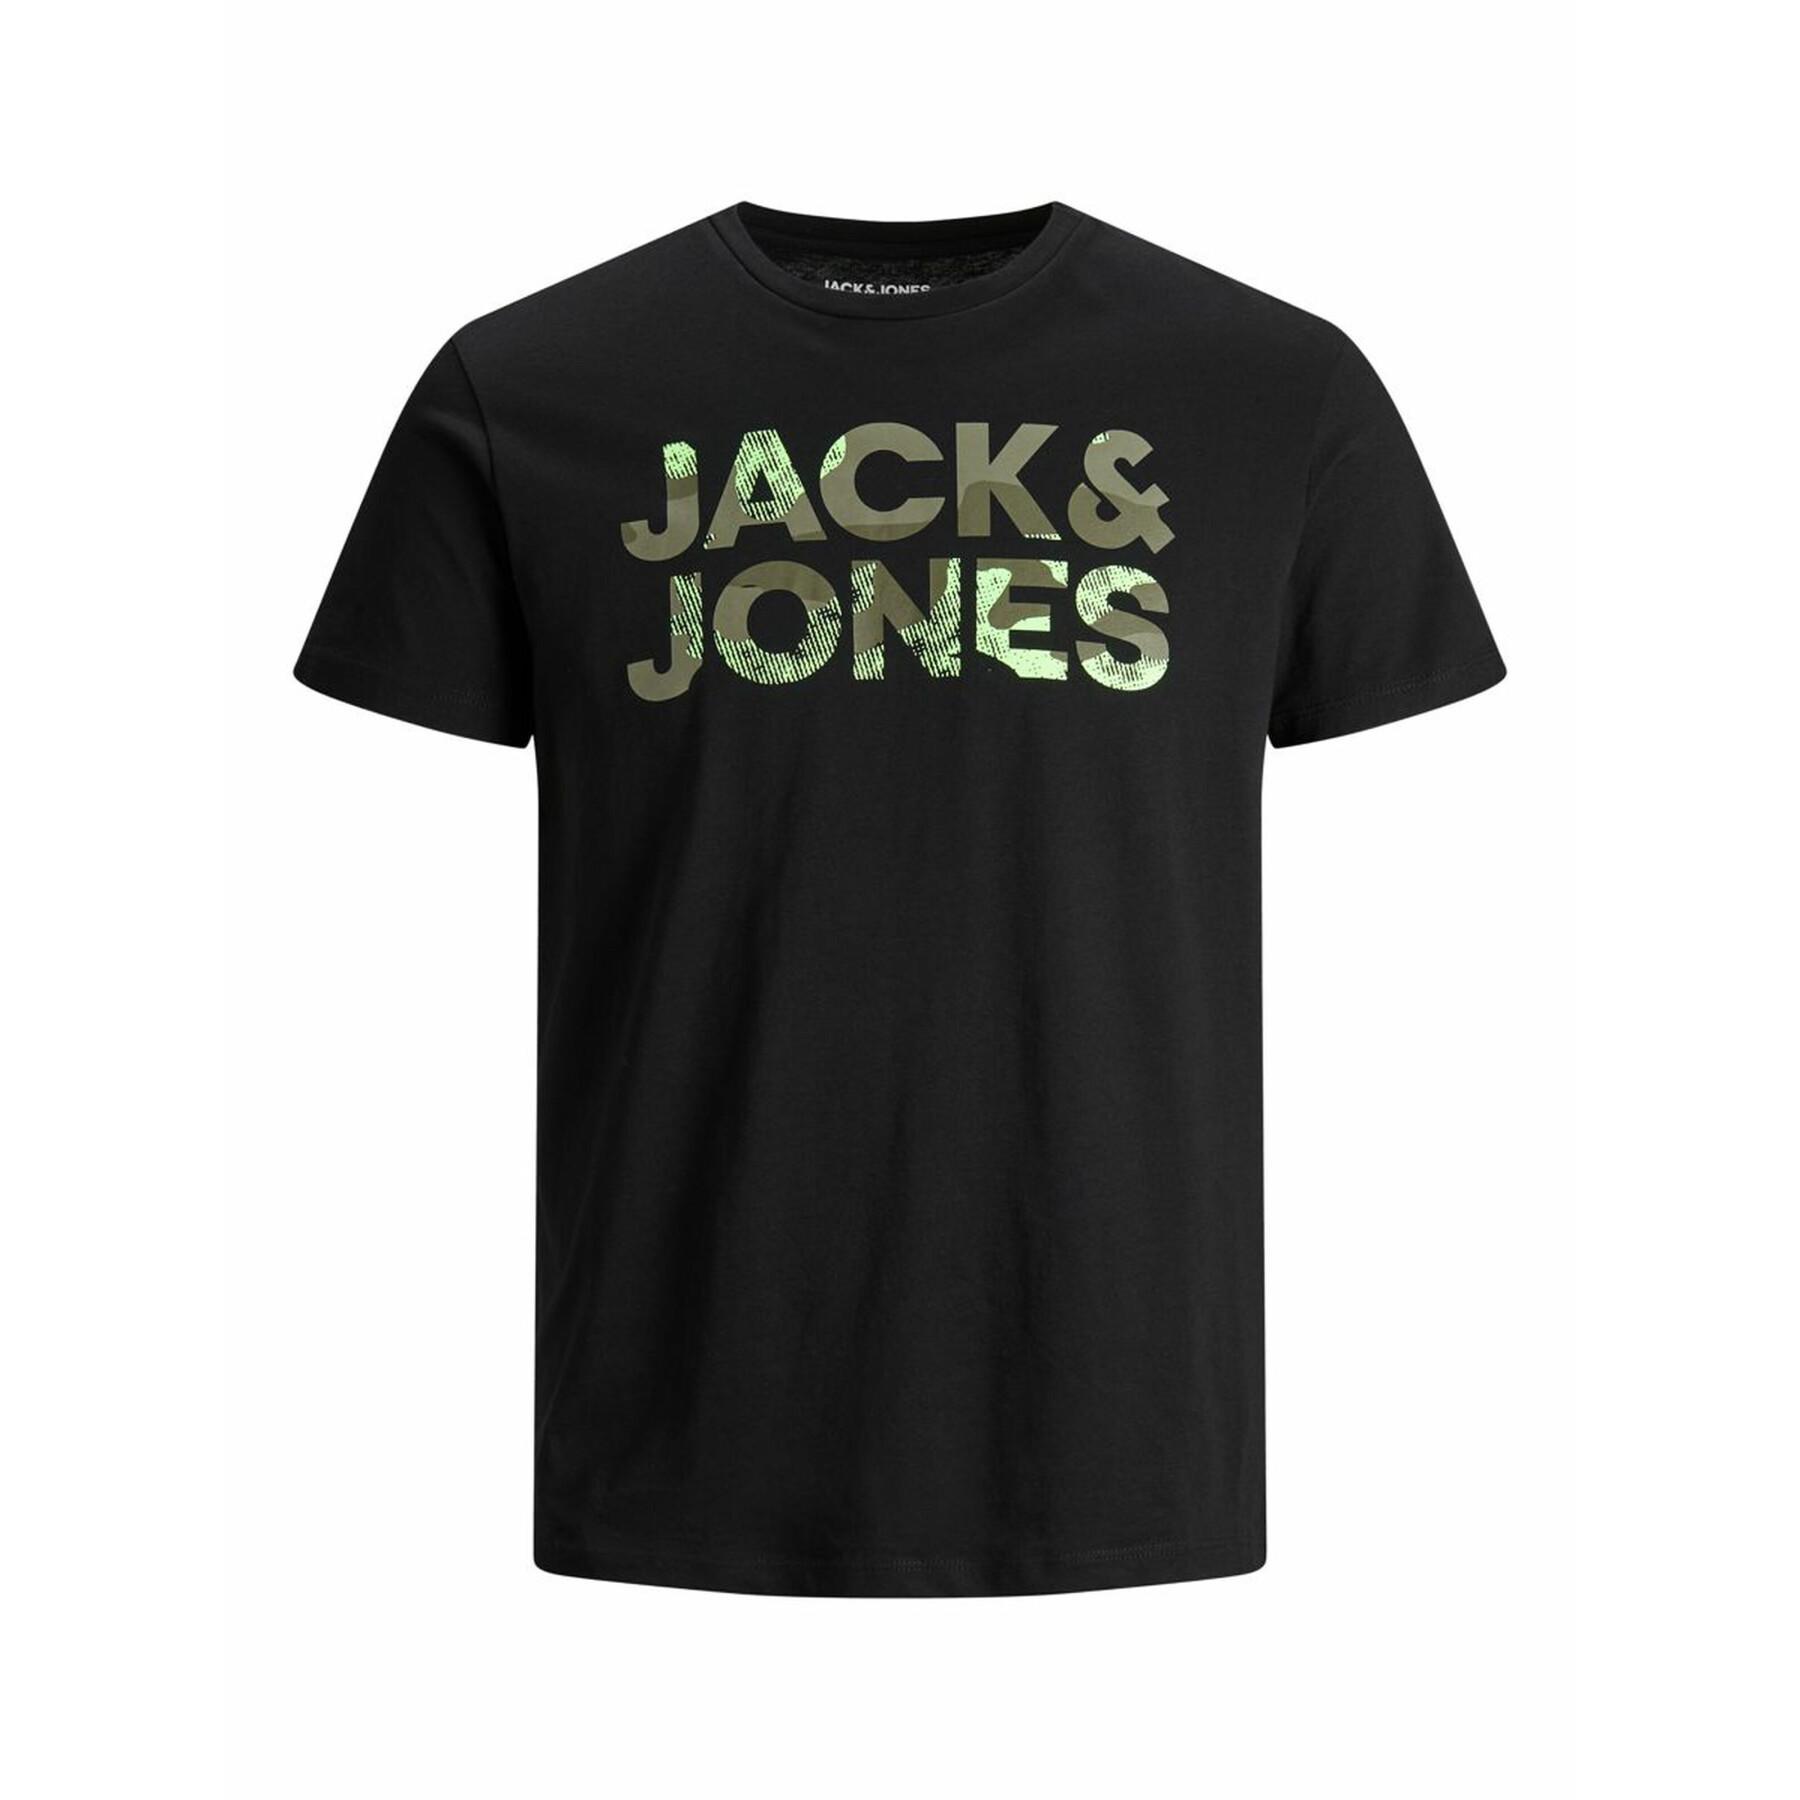 Logo T-shirt Jack & Jones imprimé